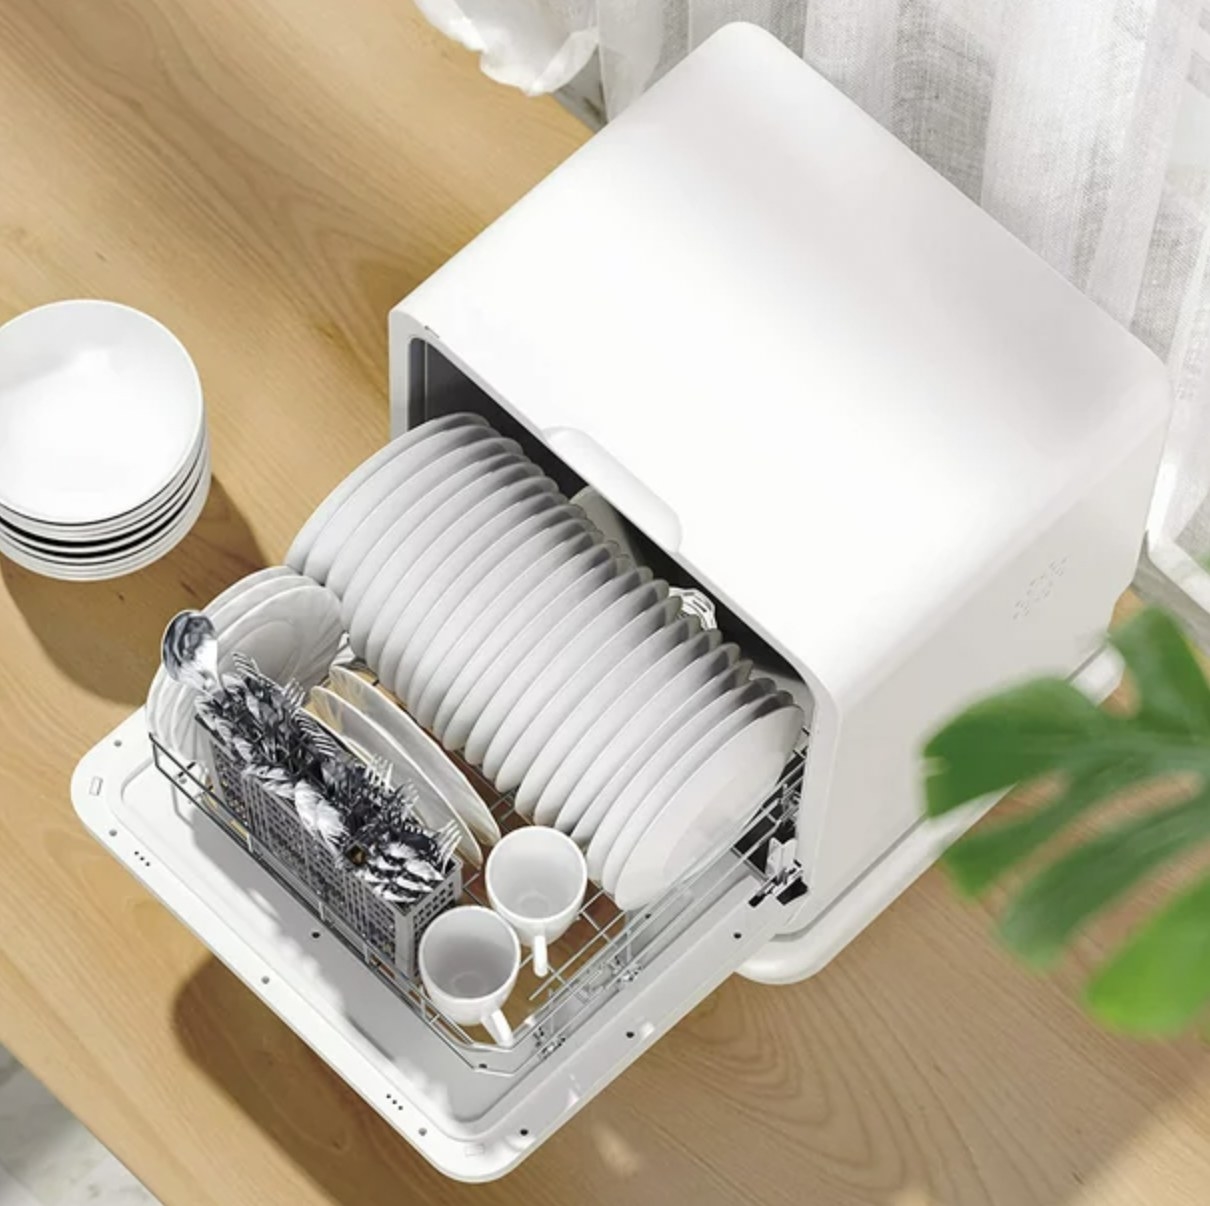 A white mini tabletop dishwasher